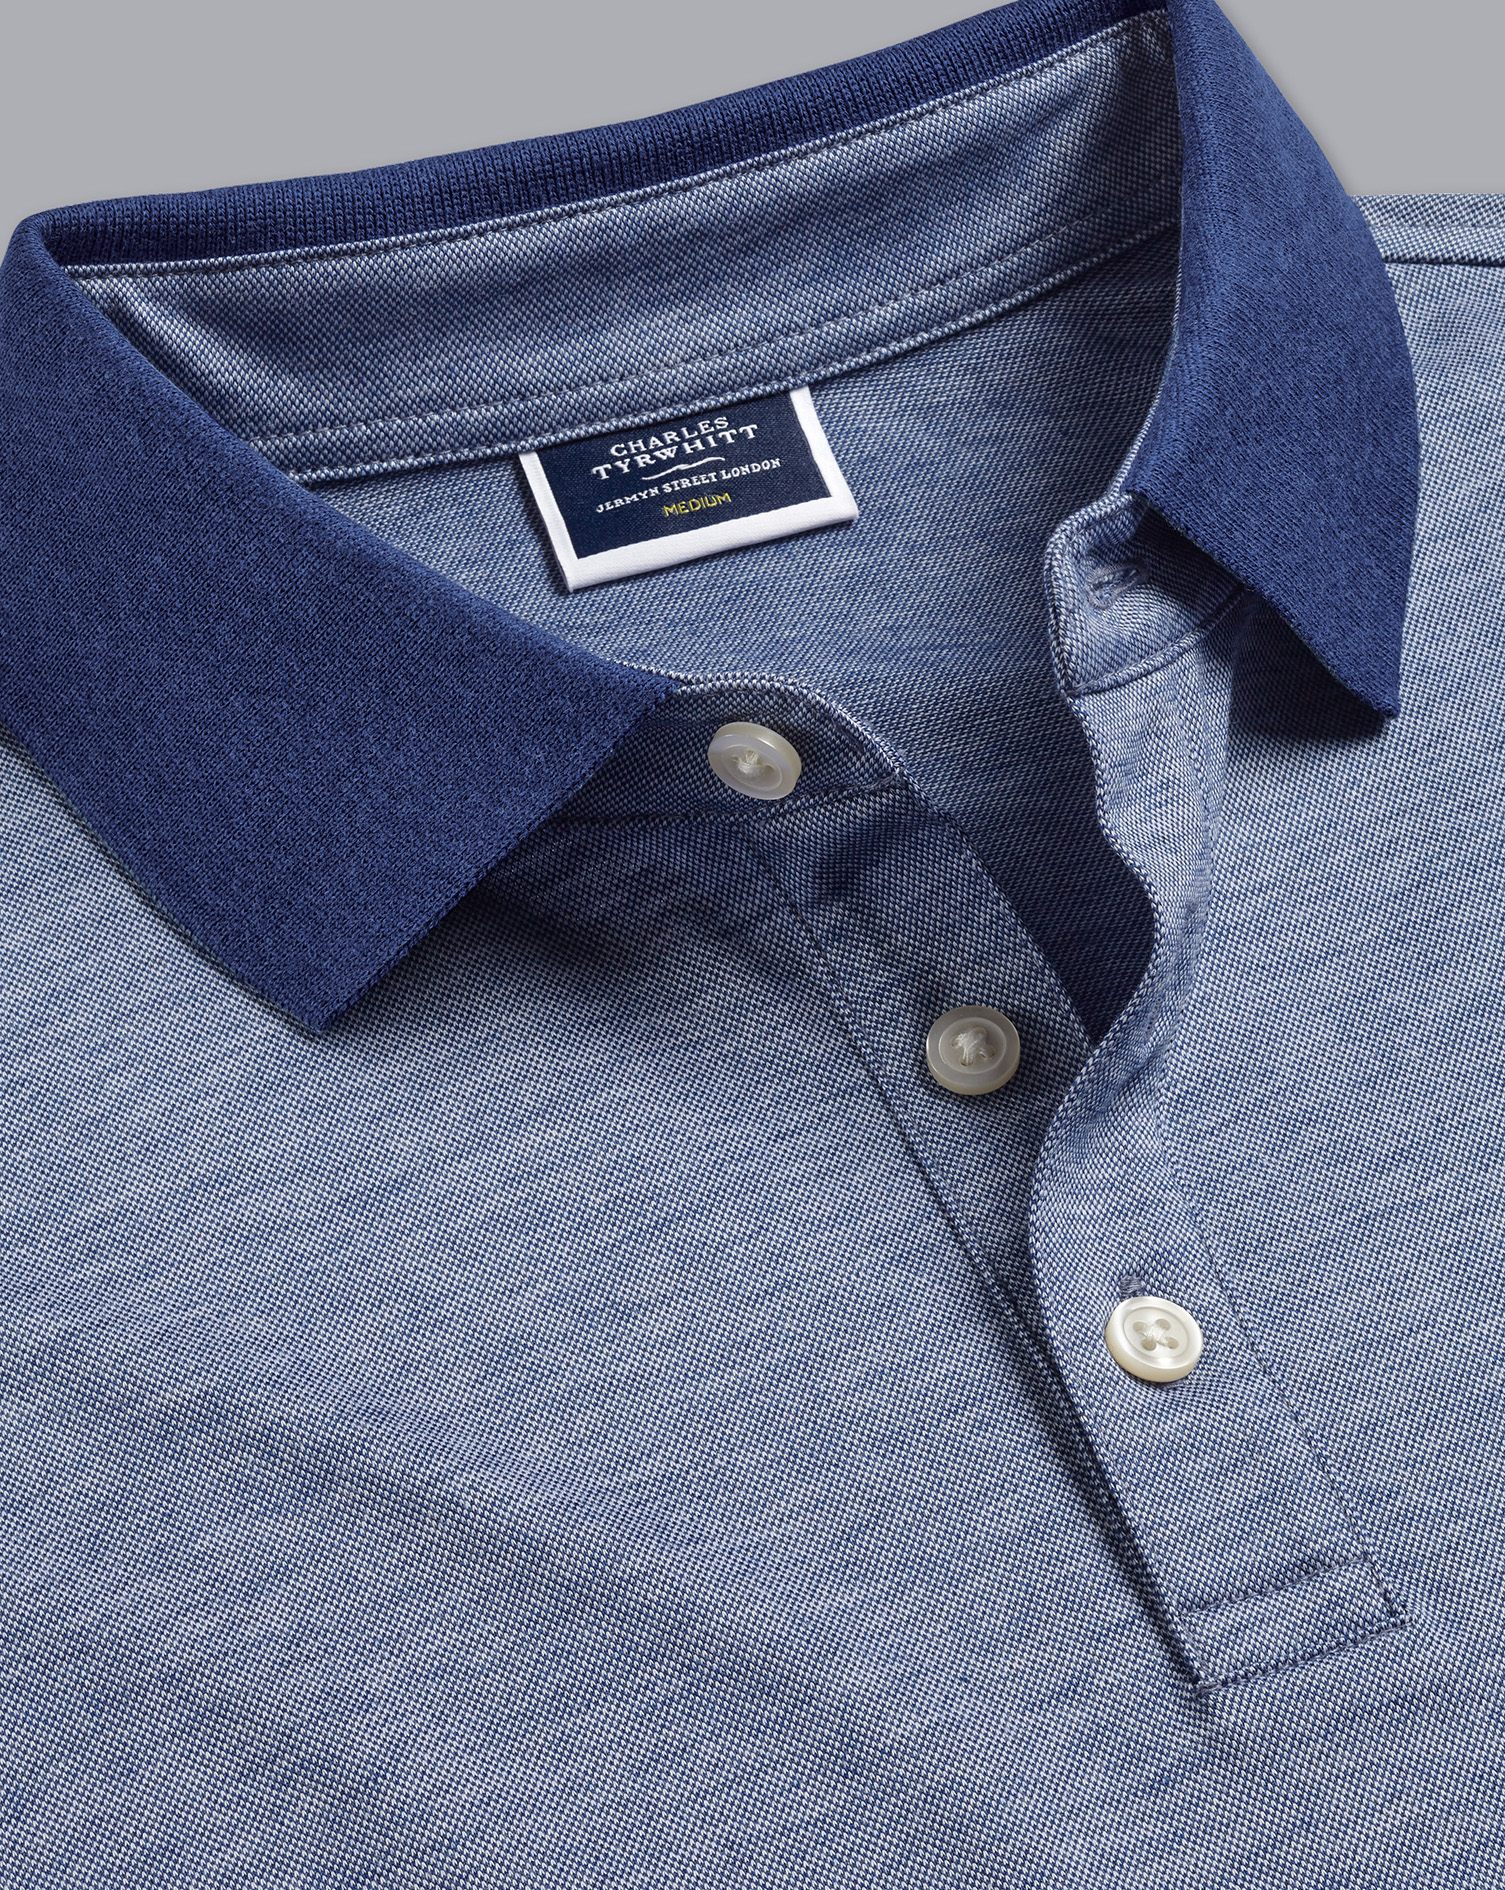 Men's Charles Tyrwhitt Birdseye Pique Polo Shirt - Royal Blue Size XXXL Cotton
